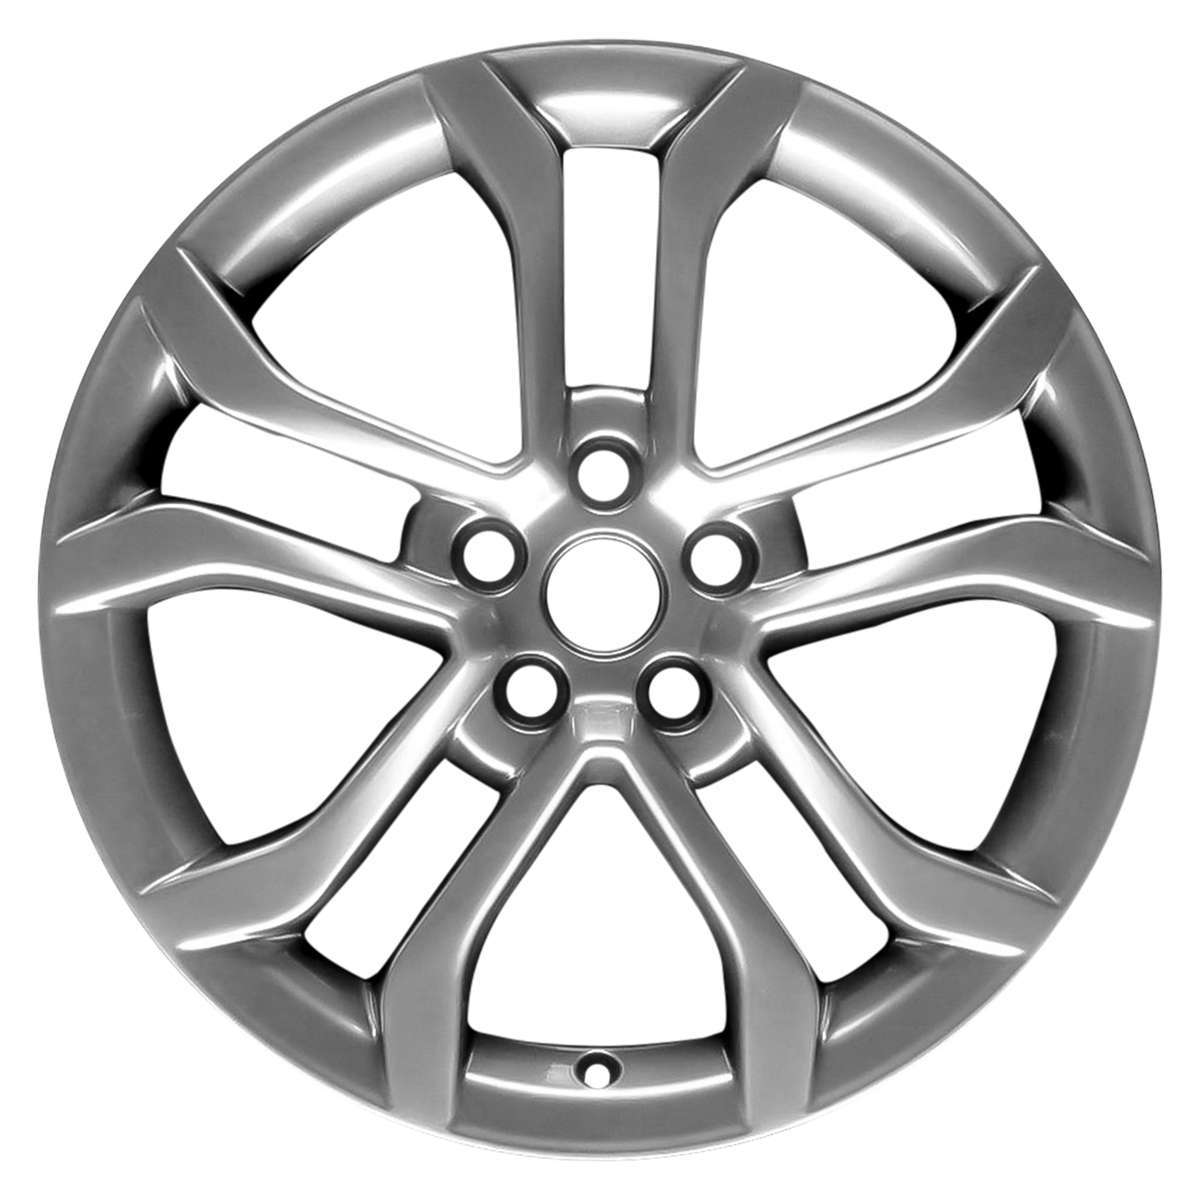 2020 Ford Fusion 18" OEM Wheel Rim W10120S